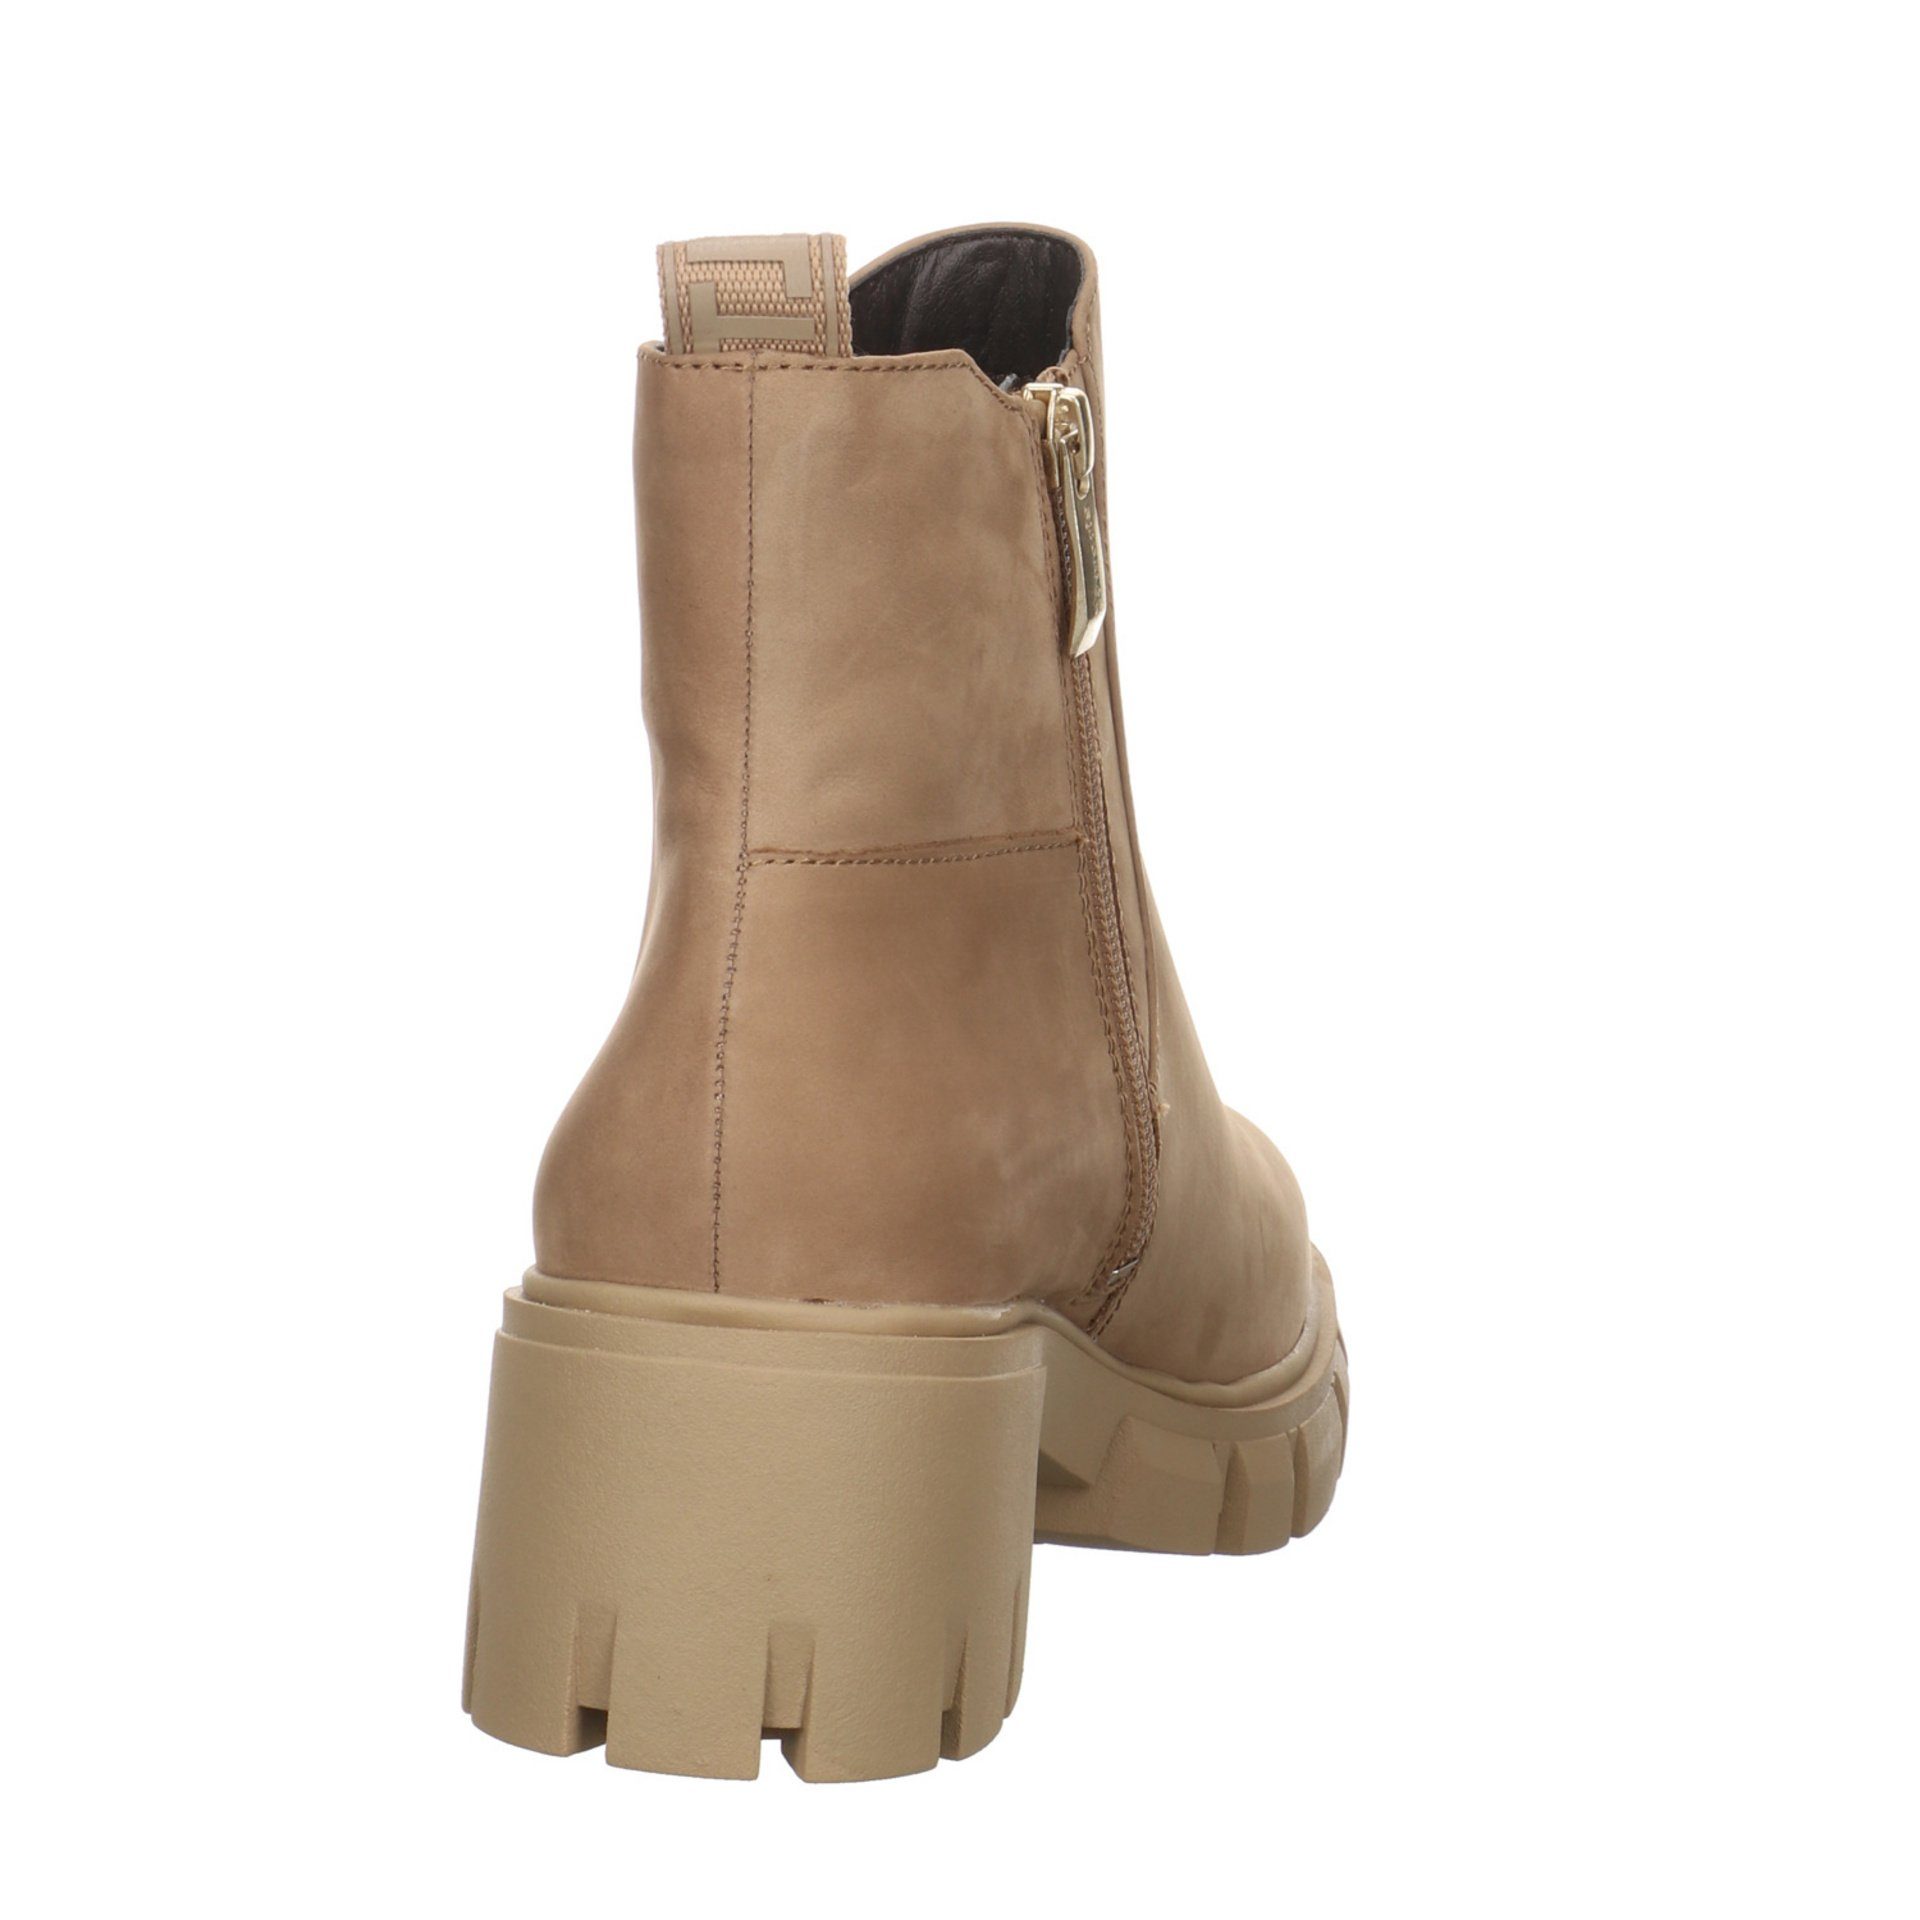 Tamaris Damen Stiefeletten Stiefelette Beige Chelsea (21203969) Leder-/Textilkombination Schuhe Boots